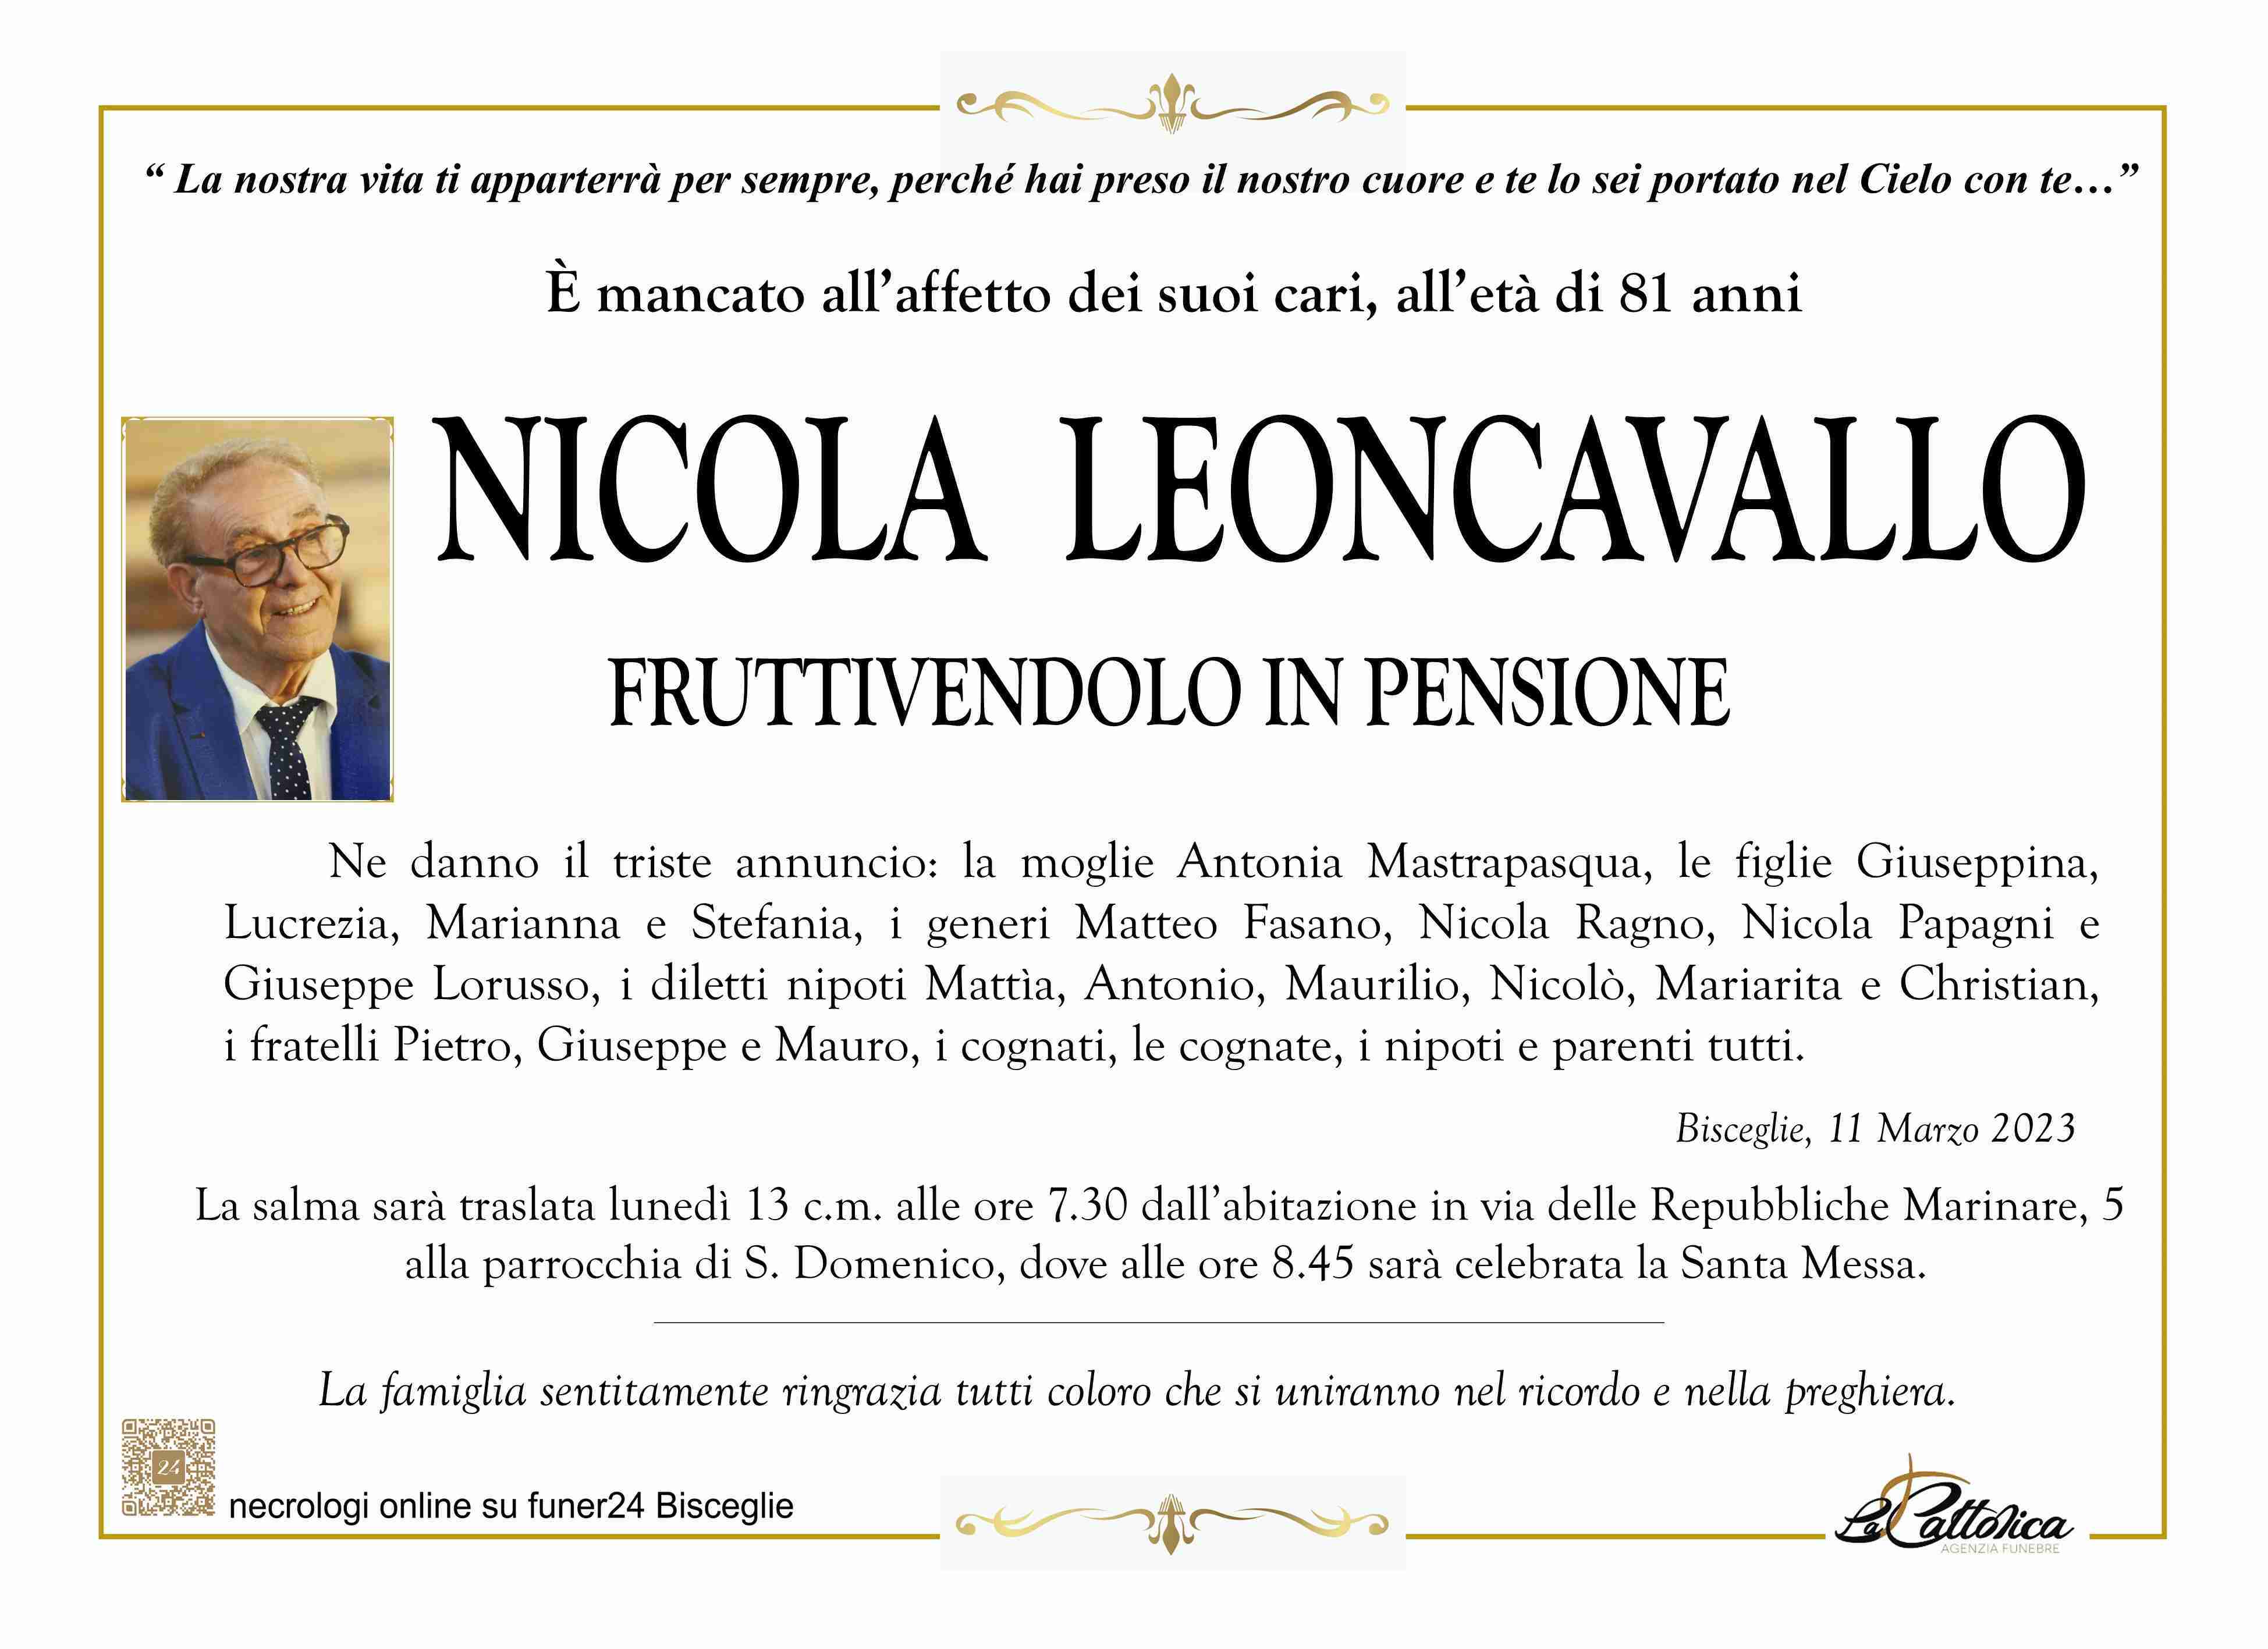 Nicola Leoncavallo